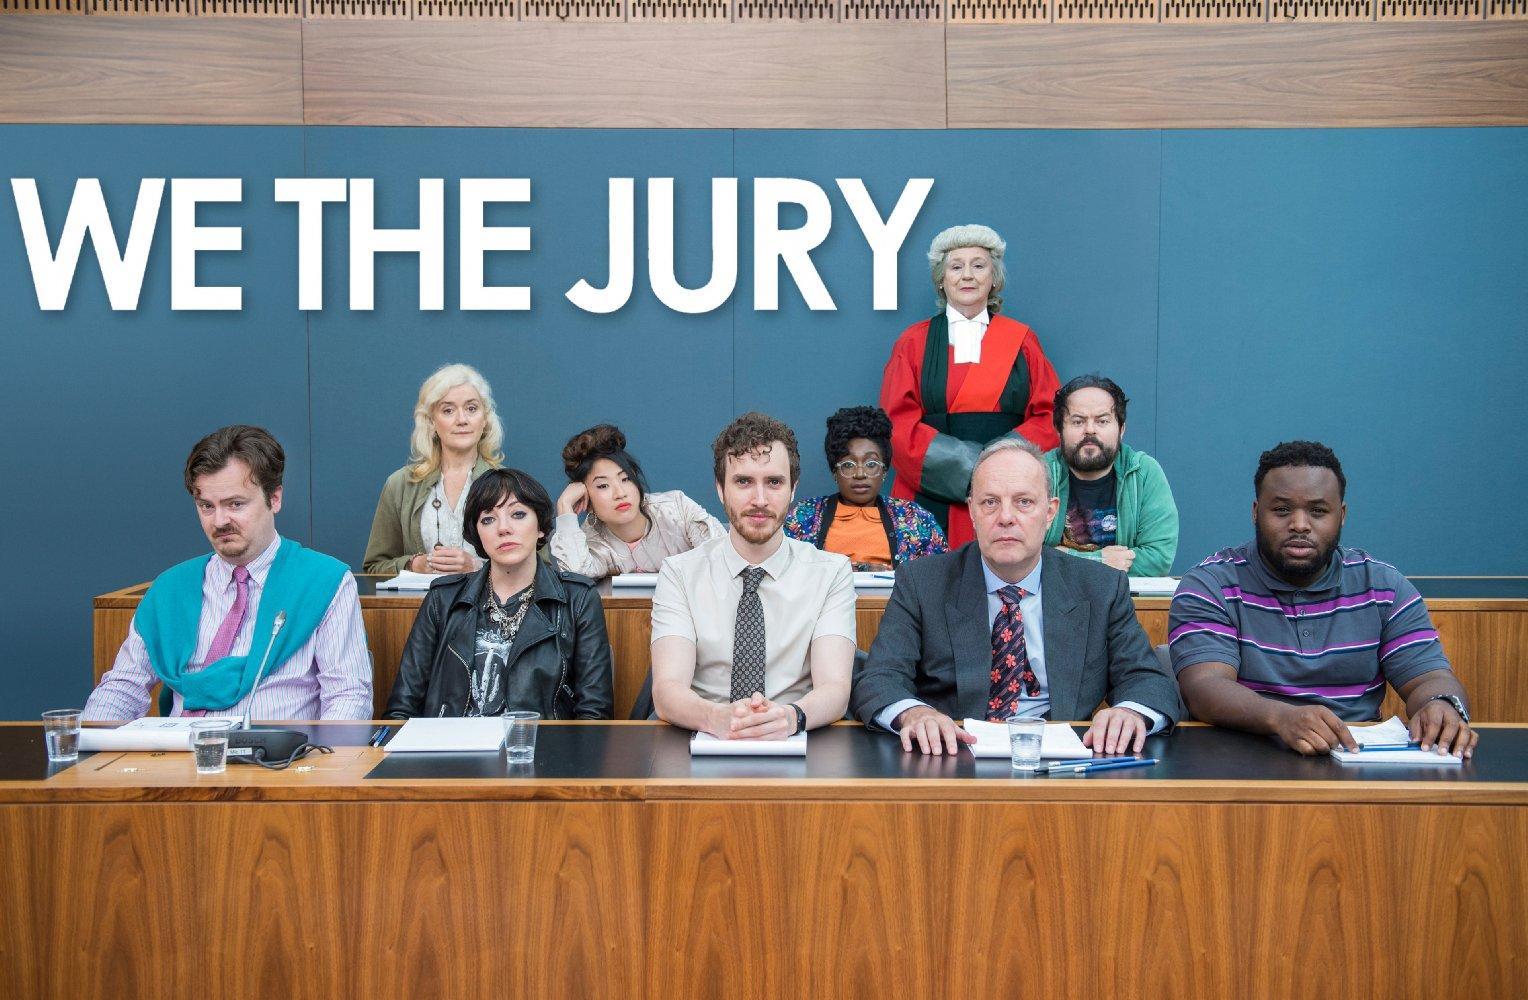 We the Jury (TV Series)